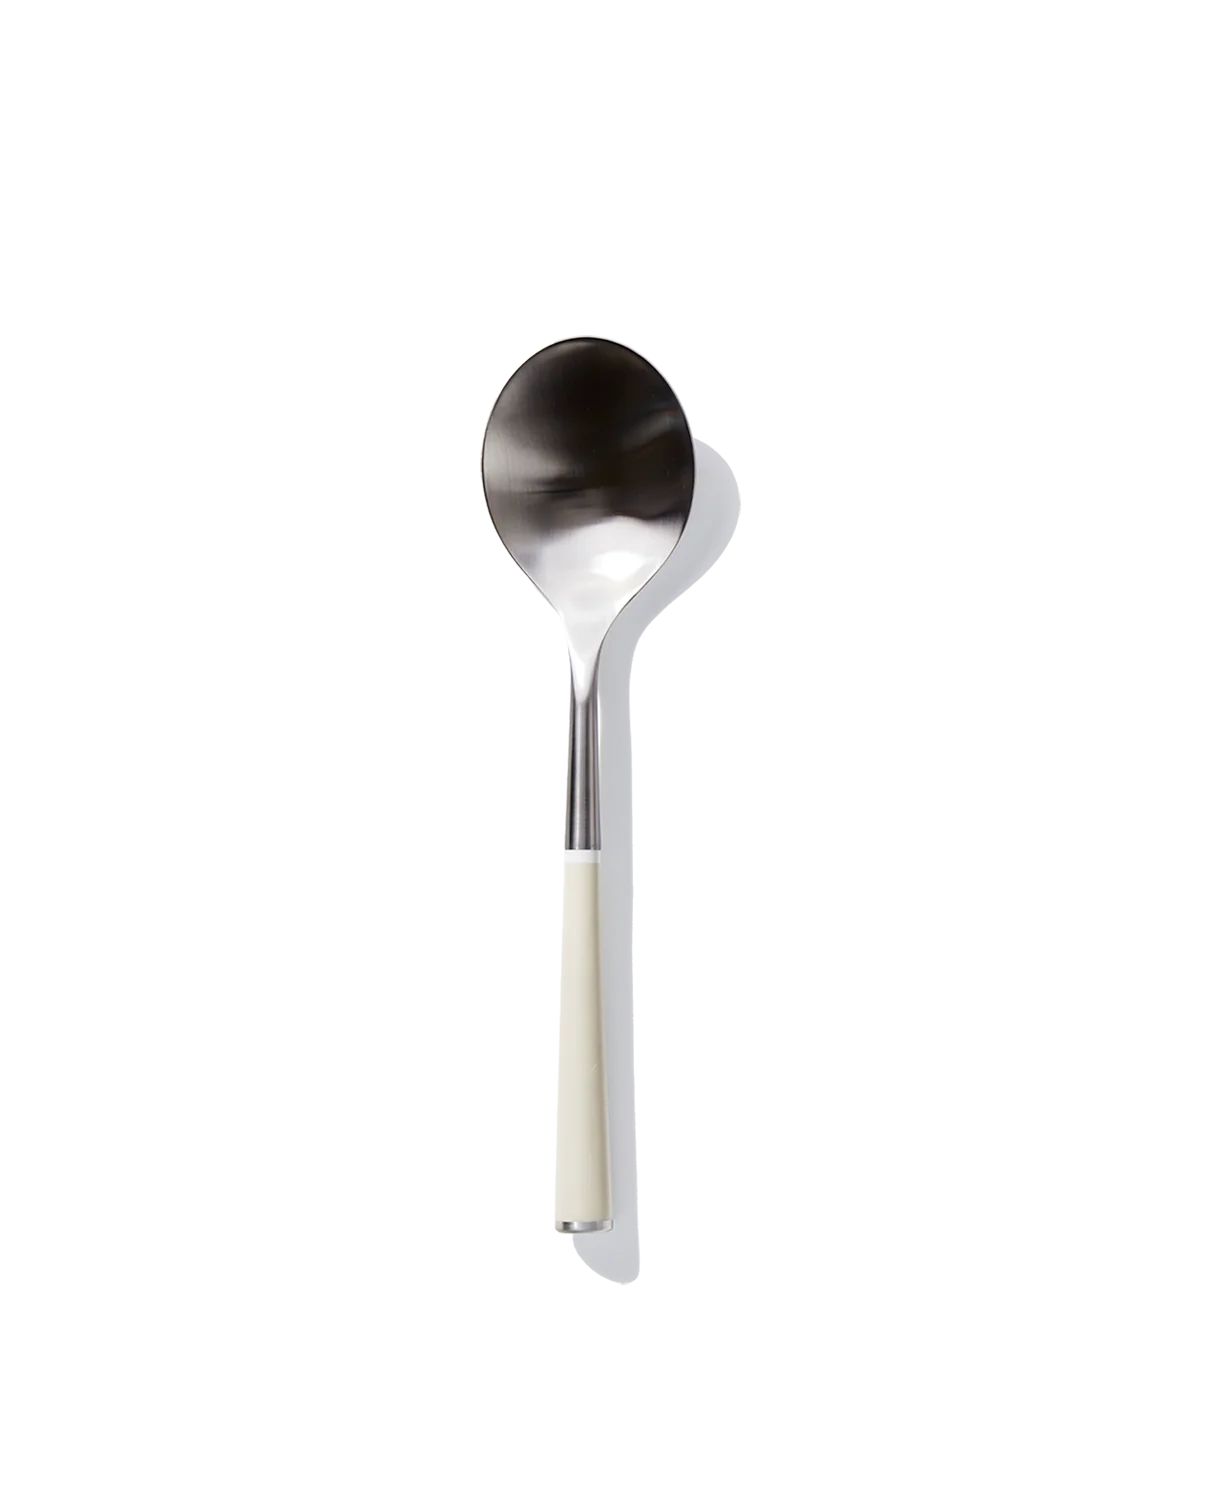 The Metal Spoon | Material